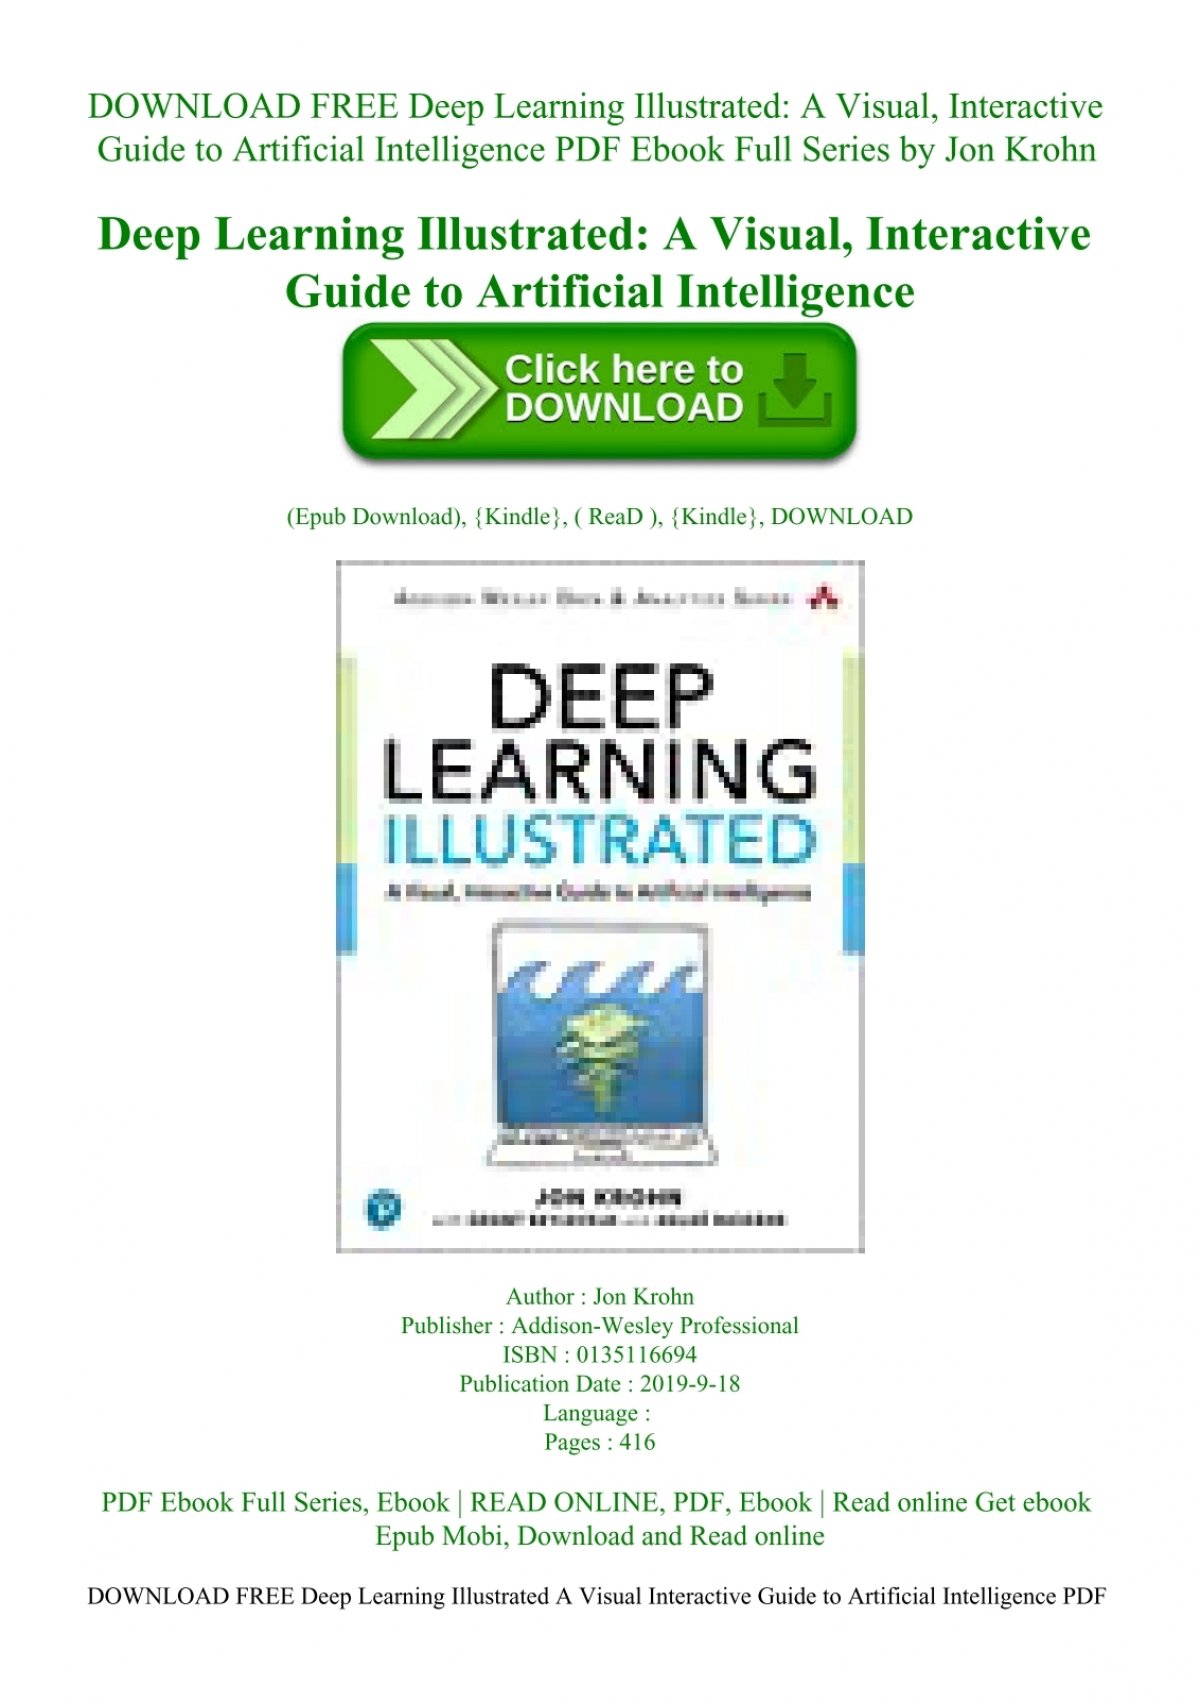 jon krohn deep learning illustrated pdf free download